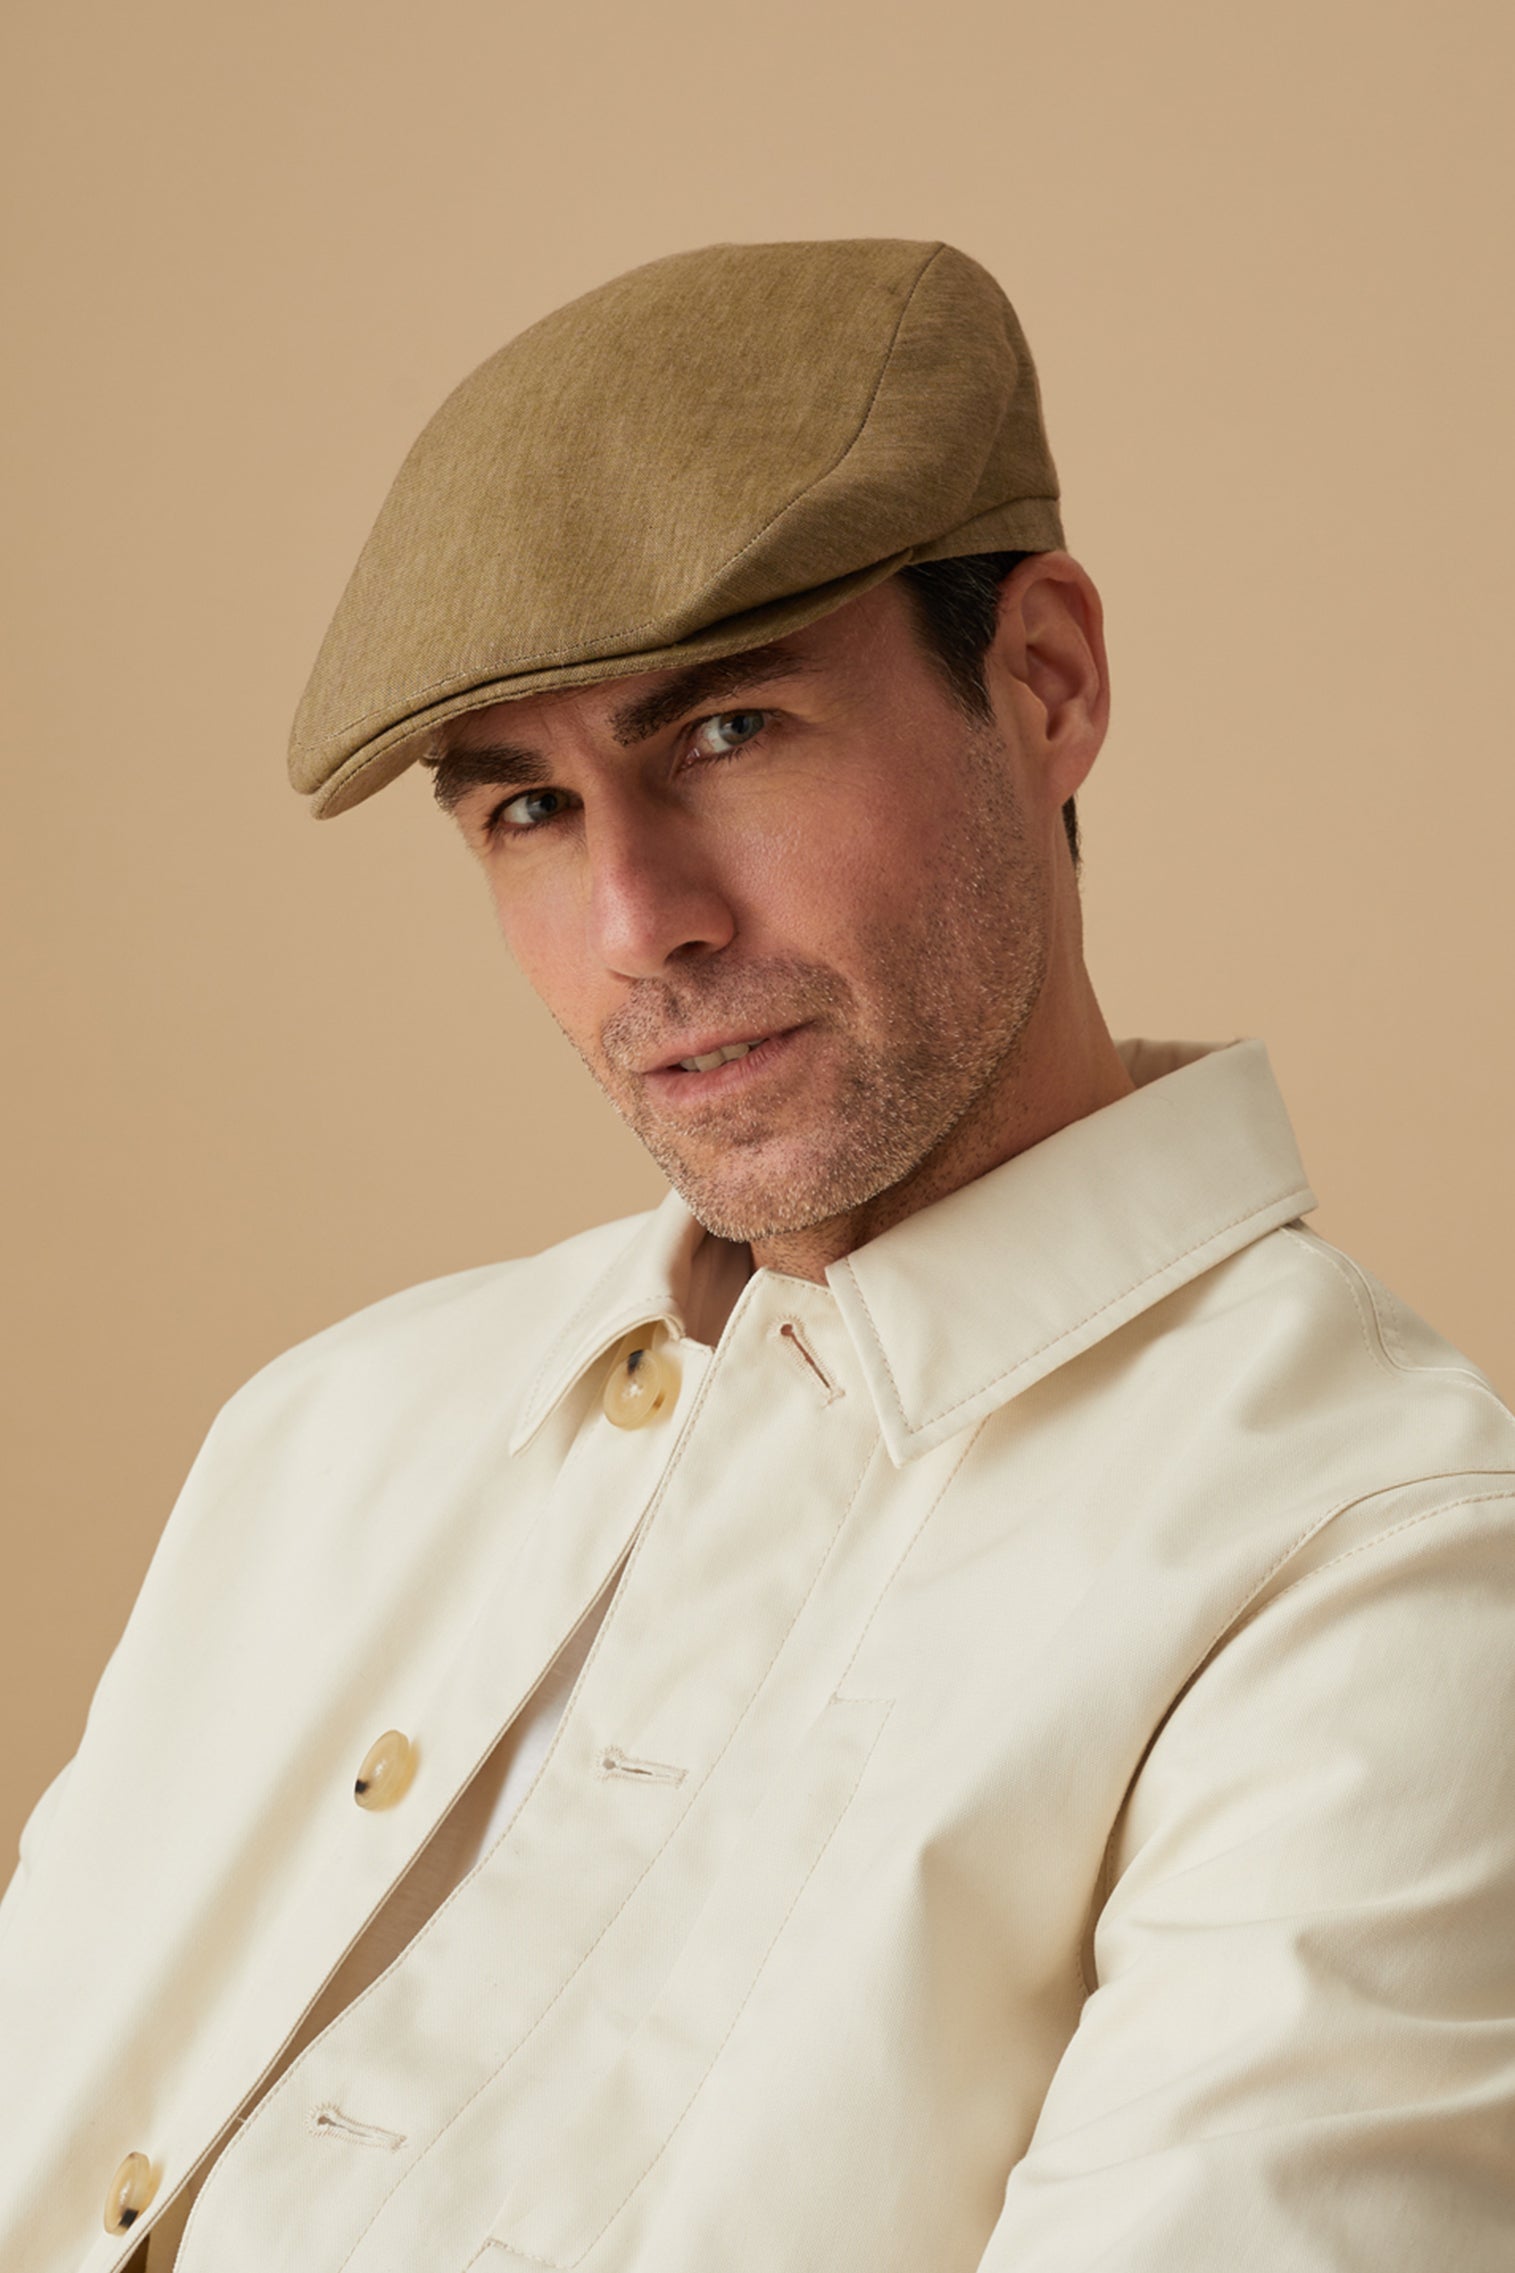 Grosvenor Olive Flat Cap - New Season Men's Hats - Lock & Co. Hatters London UK